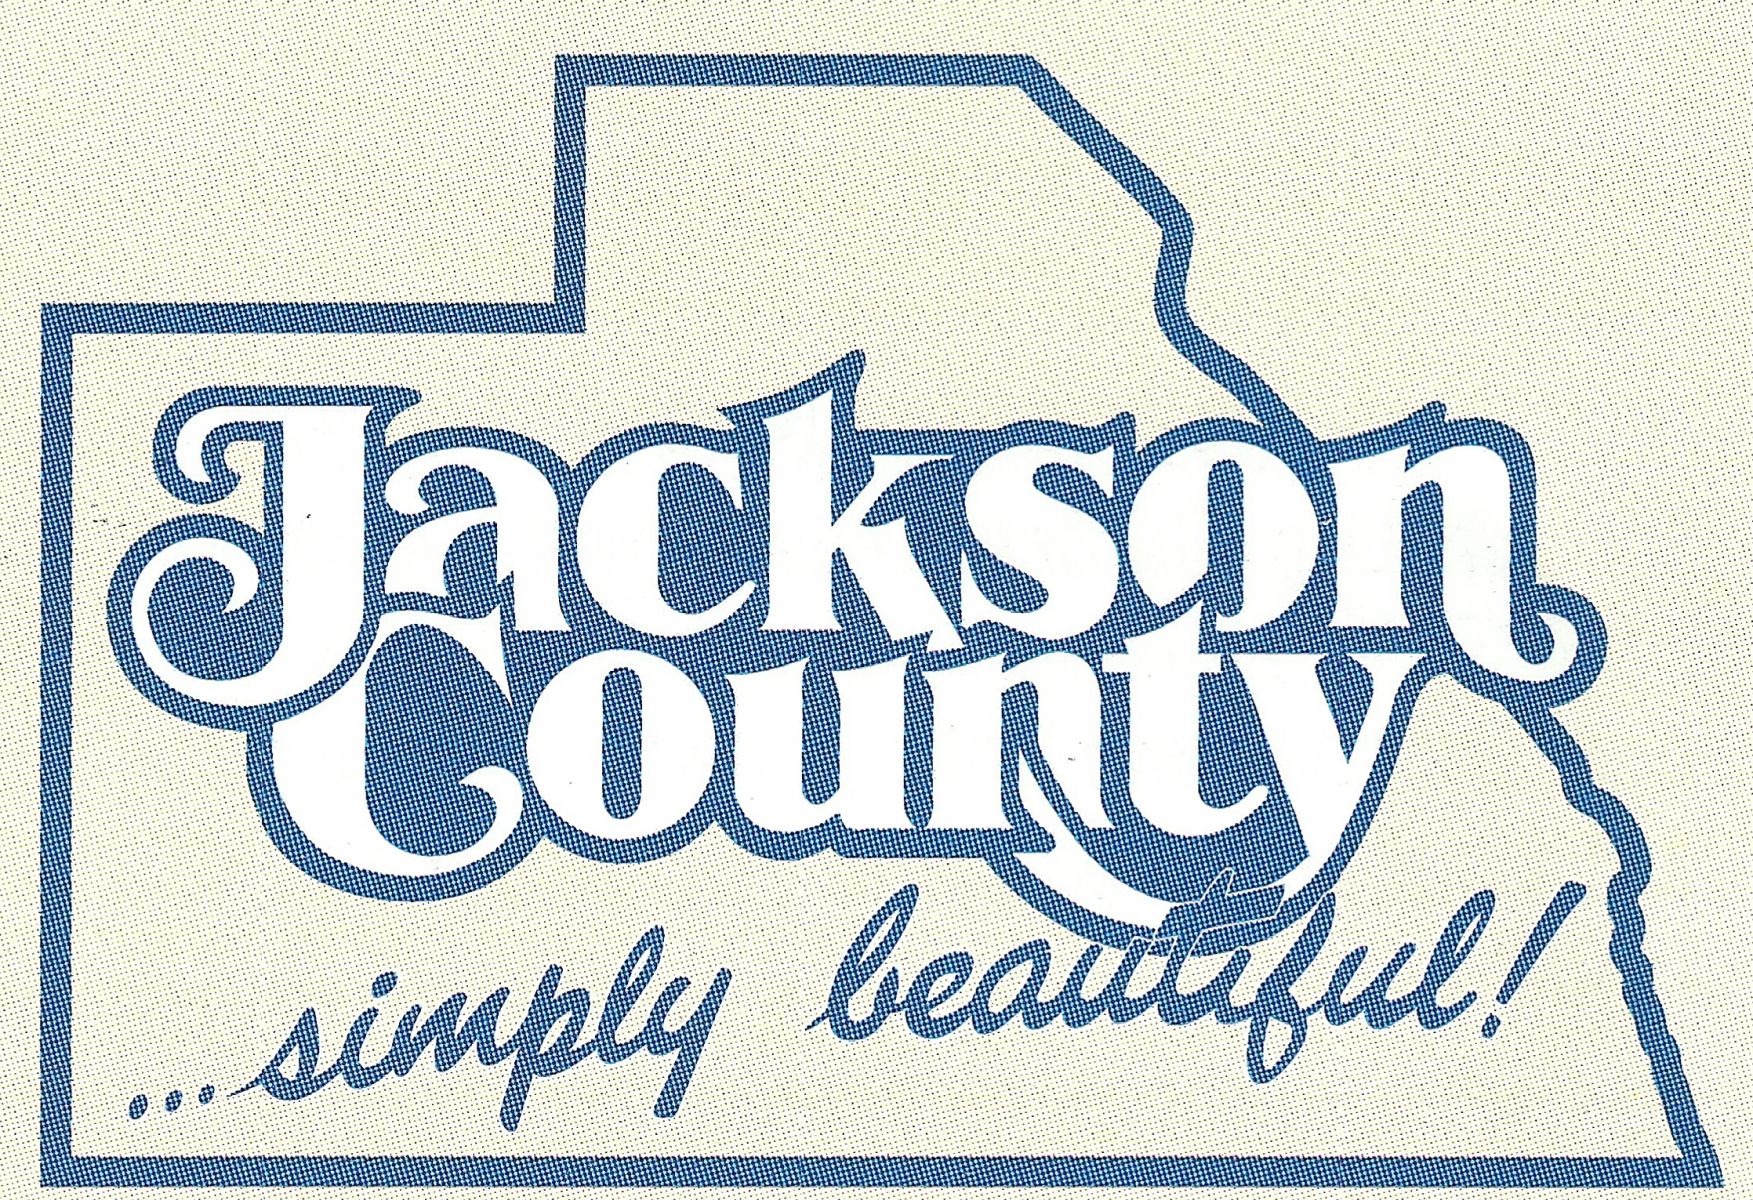 Jackson County Slide Image